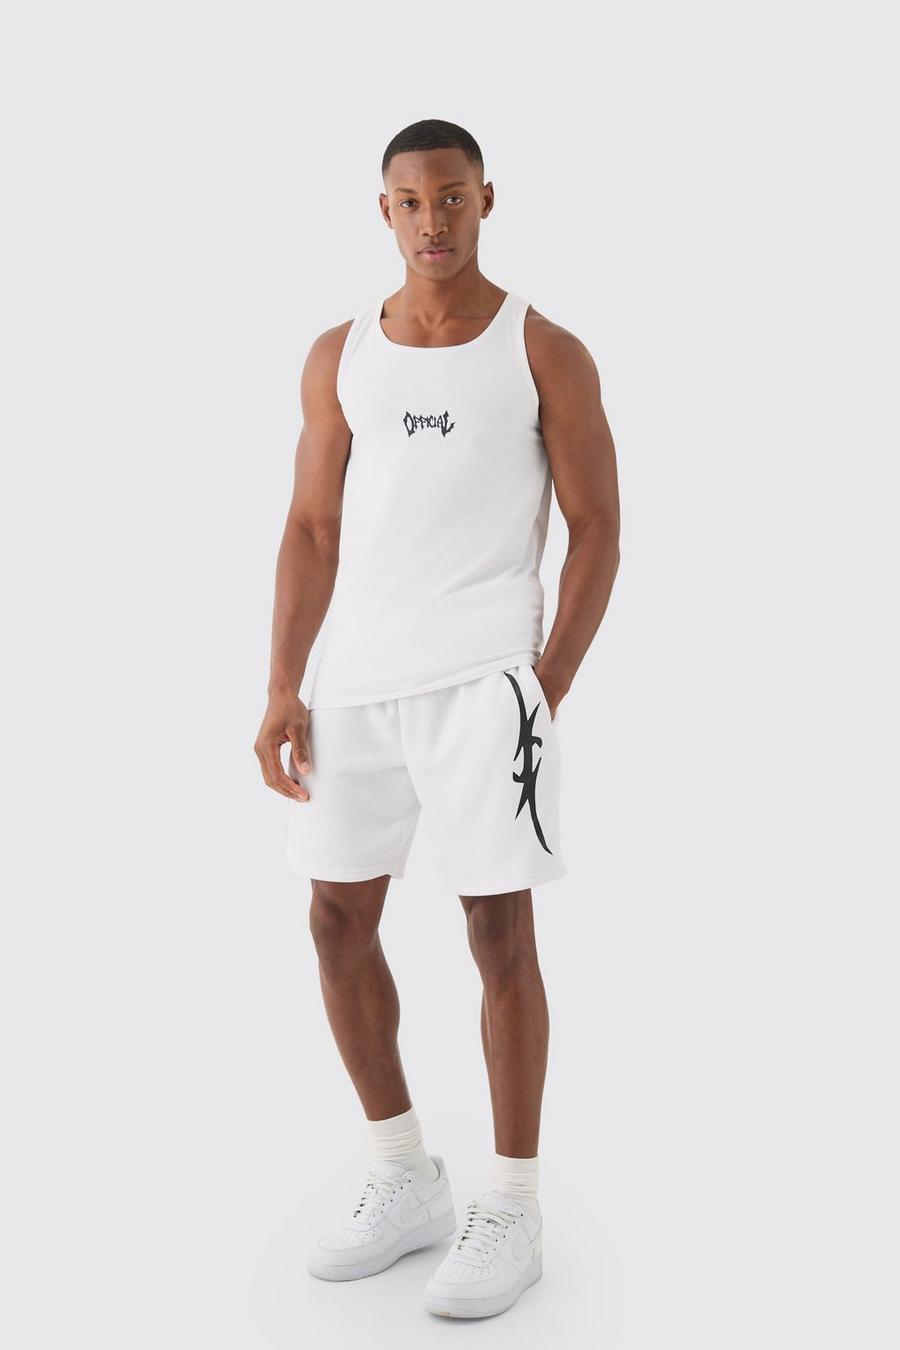 Muscle Fit Graphic Official Vest & Shorts Set, White